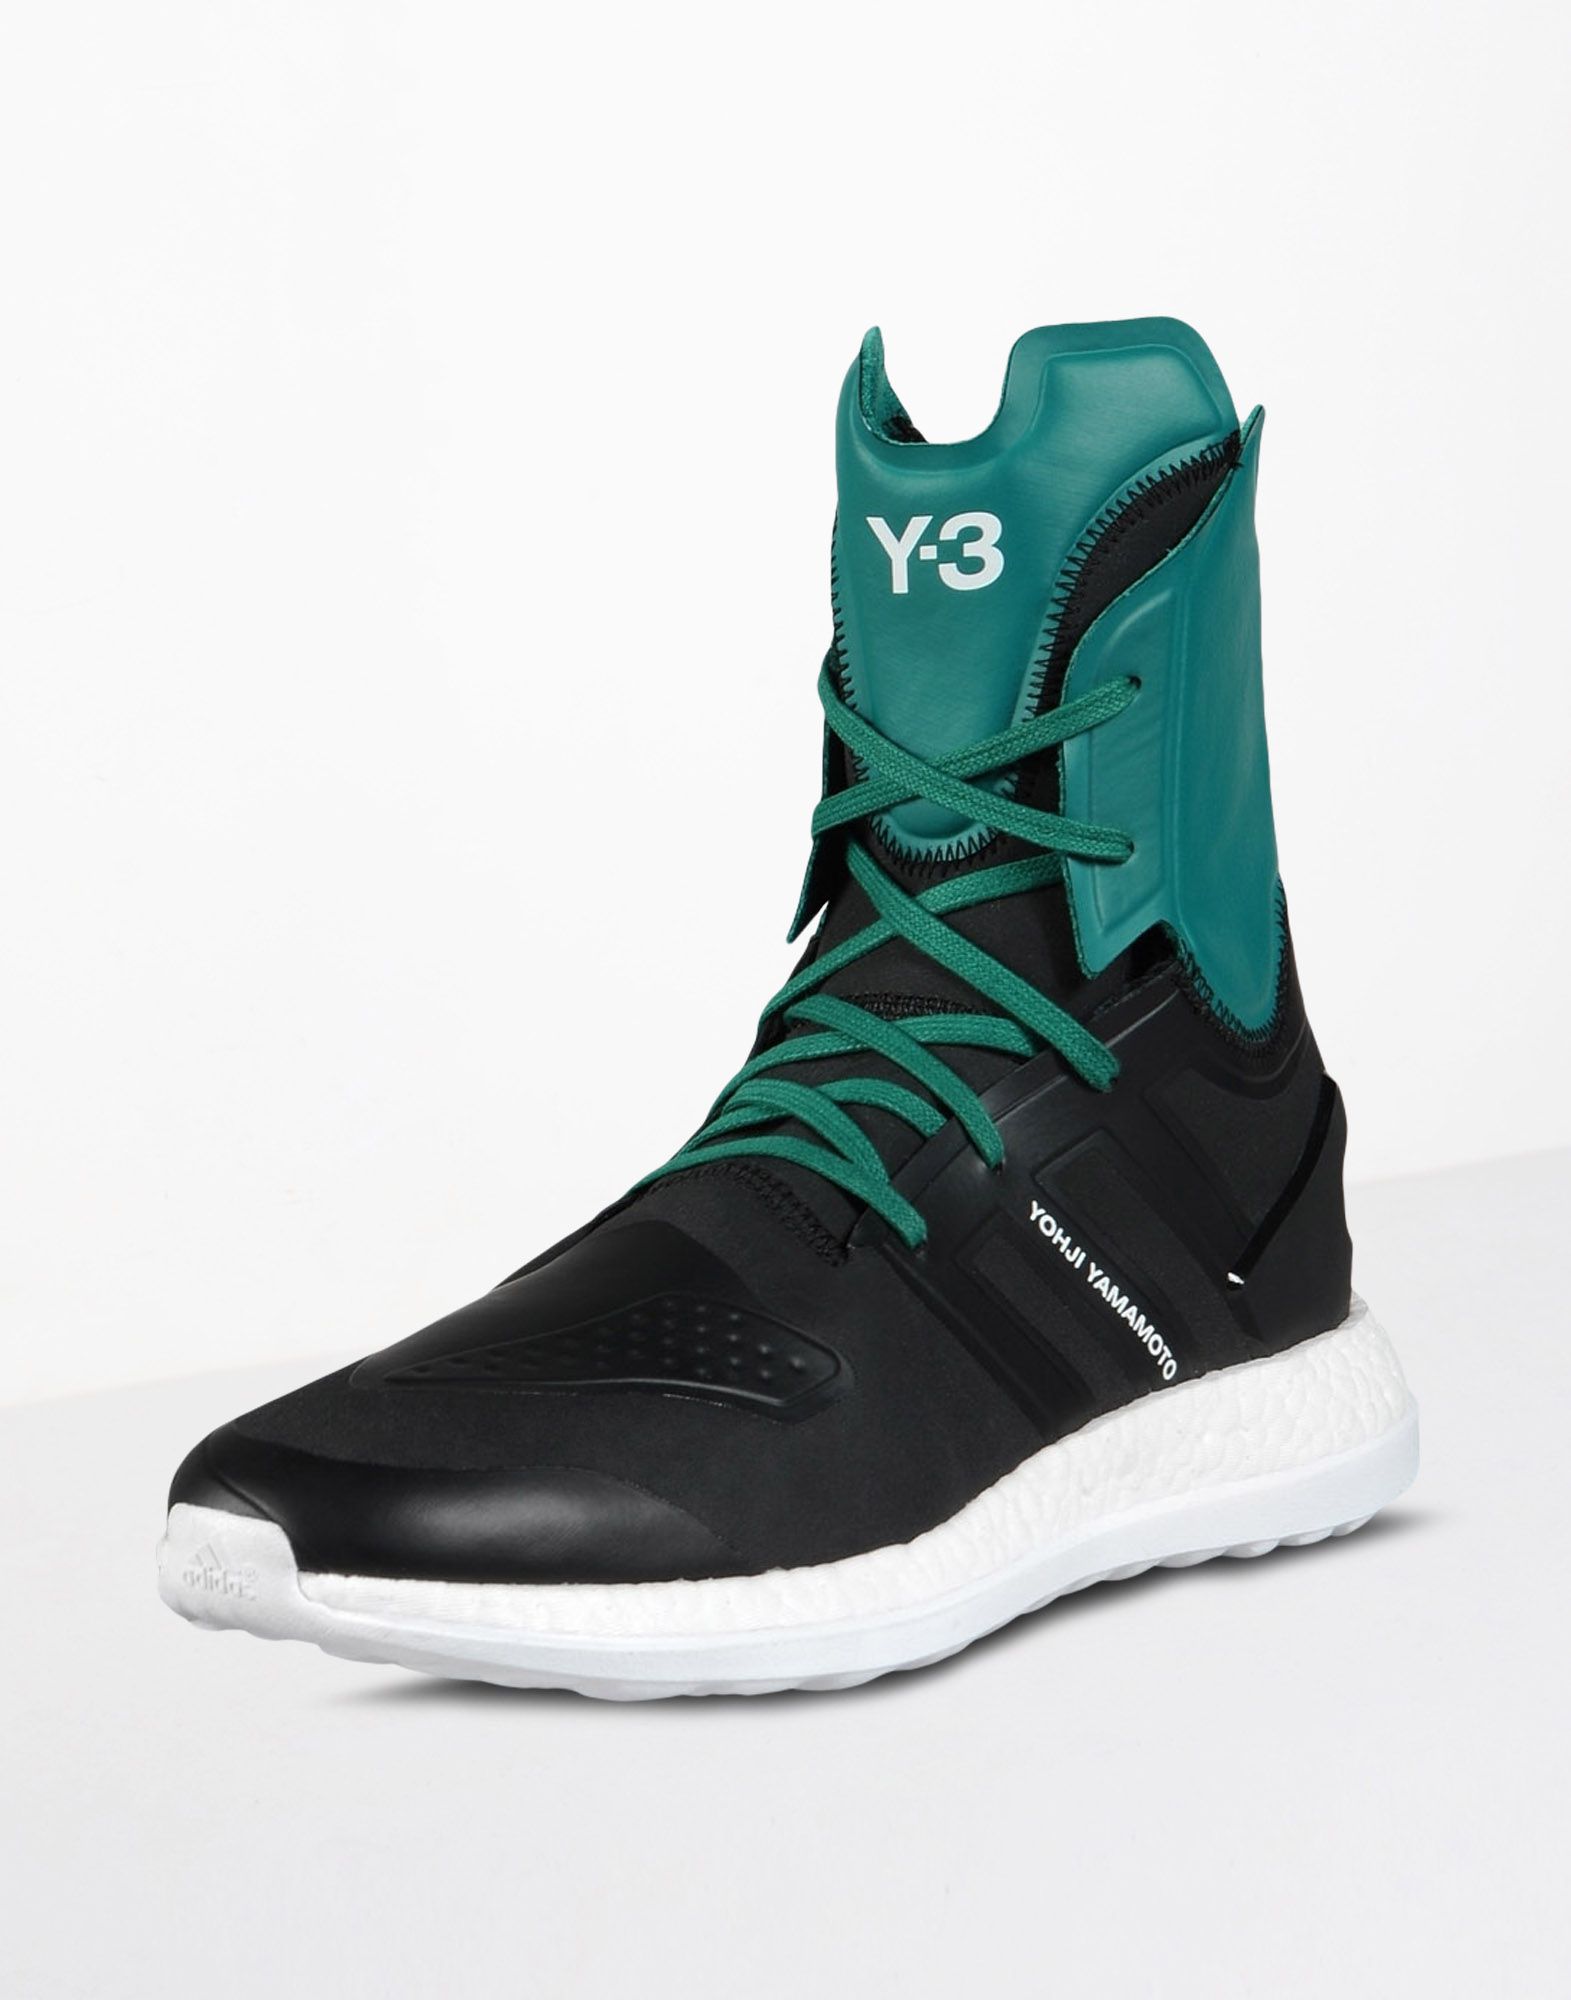 Y 3 PUREBOOST ZG HIGH for Men Adidas Y3 Official Store